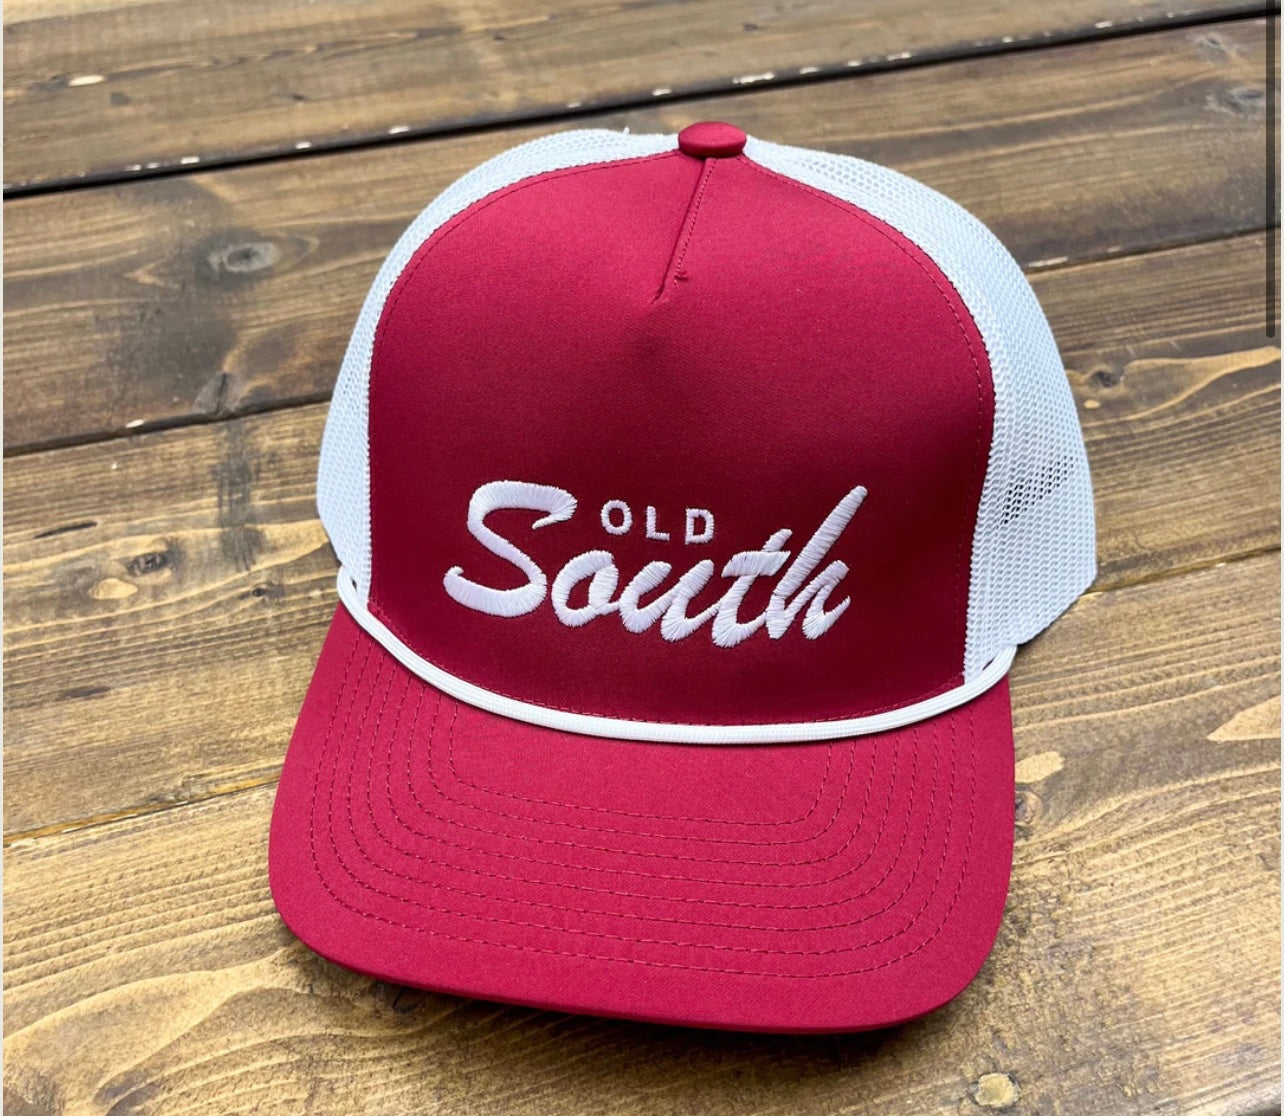 Old South Script Hat